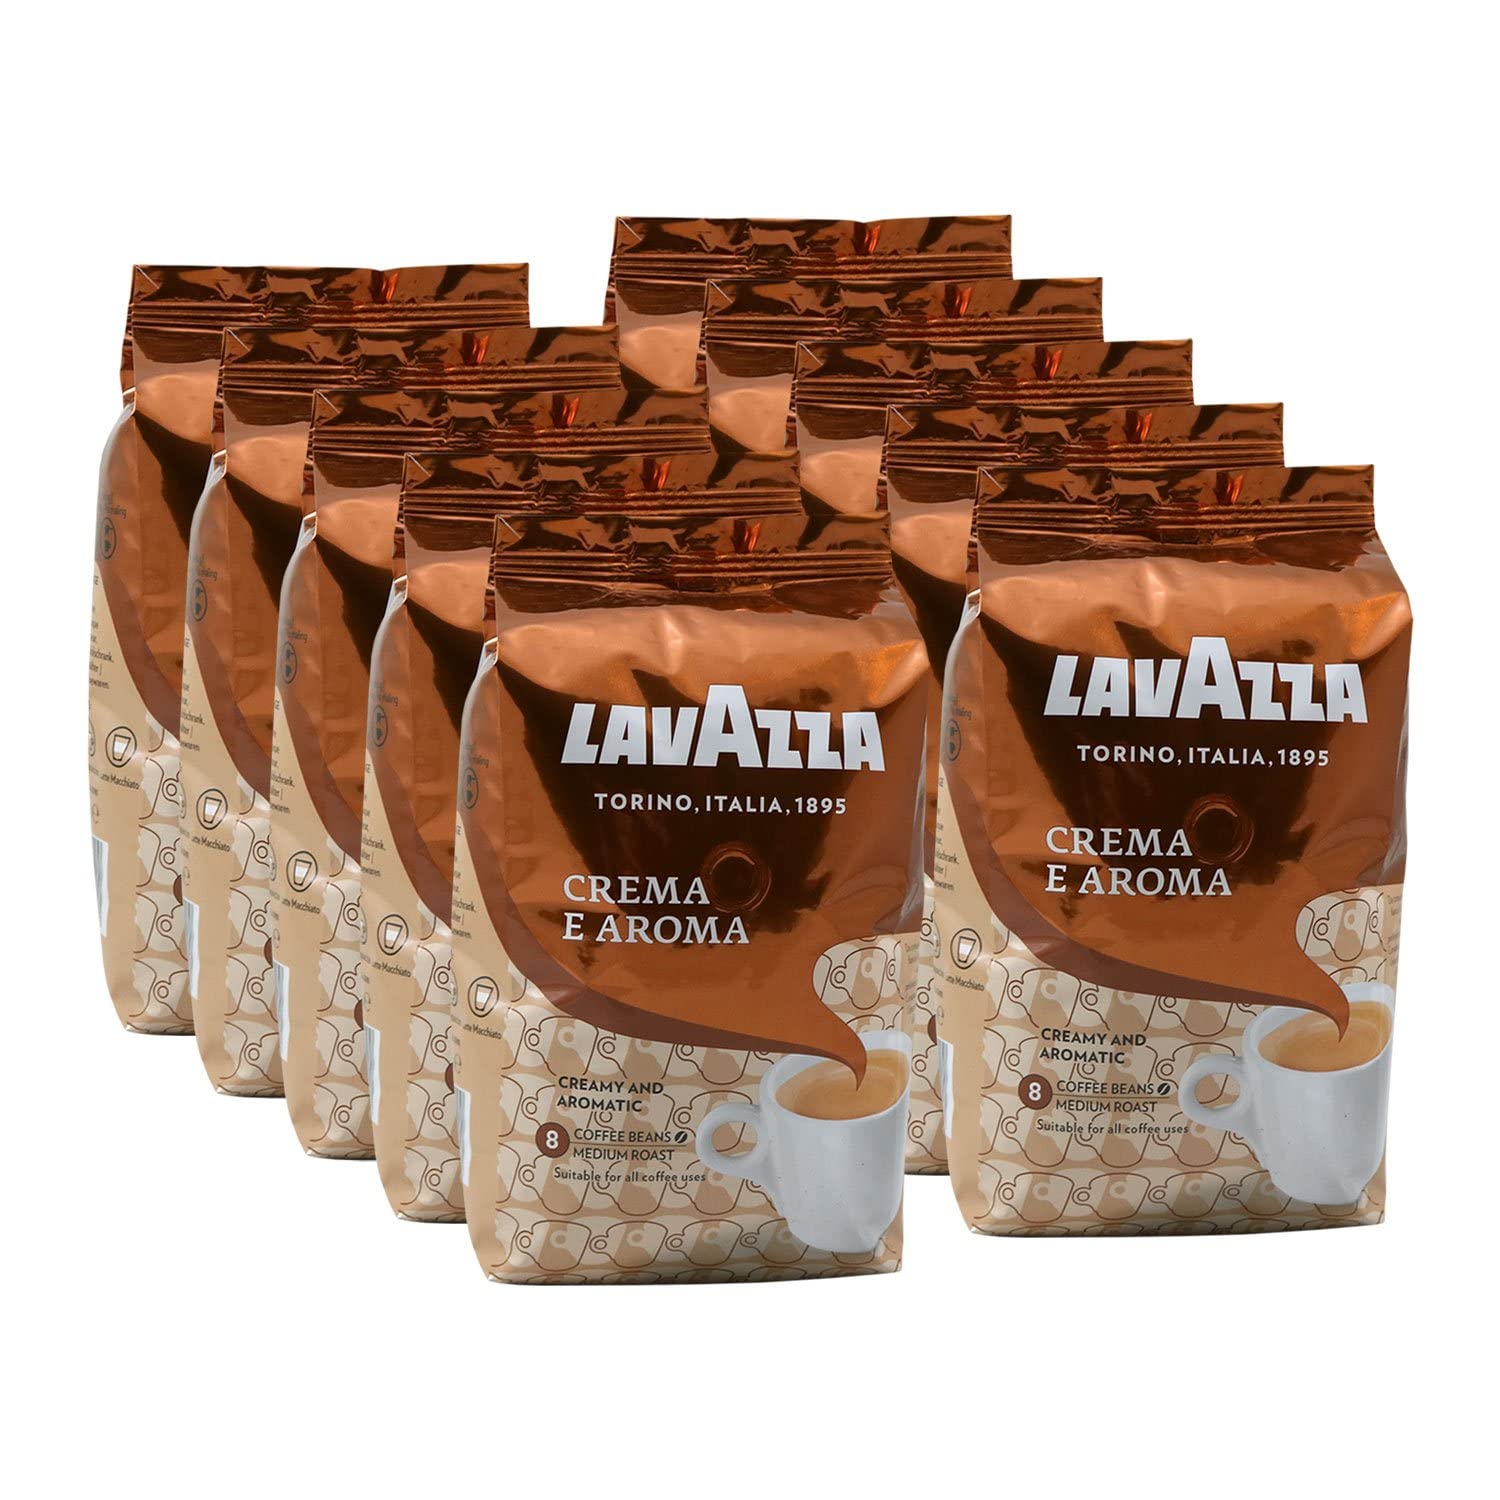 Lavazza coffee crema e aroma, entire beans, bean coffee (10 x 1kg pack)